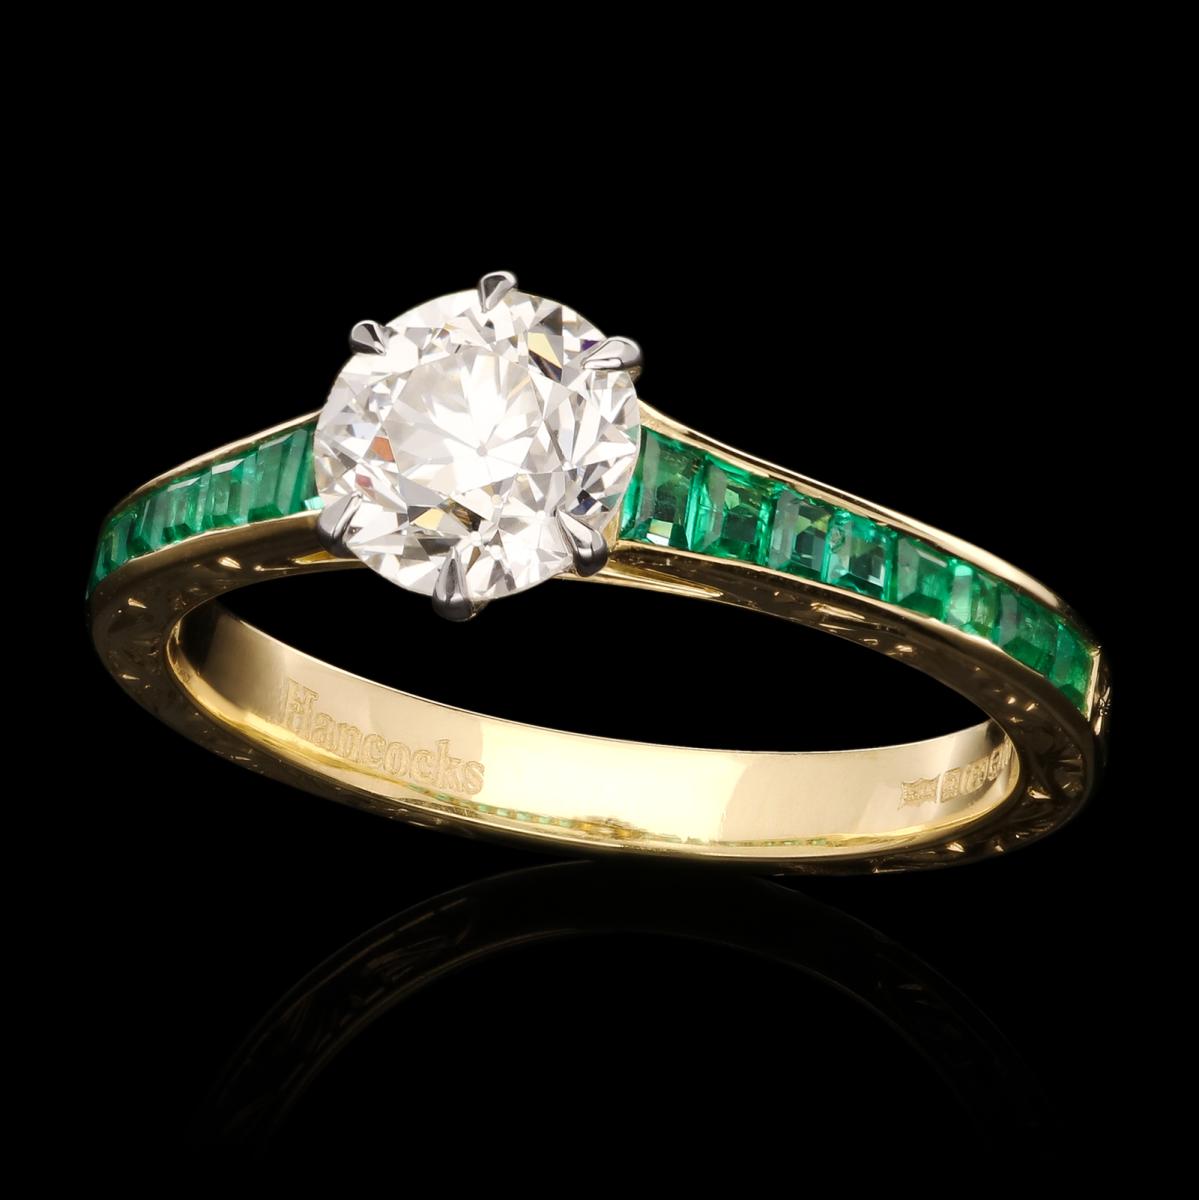  Old European Brilliant Cut Diamond Ring